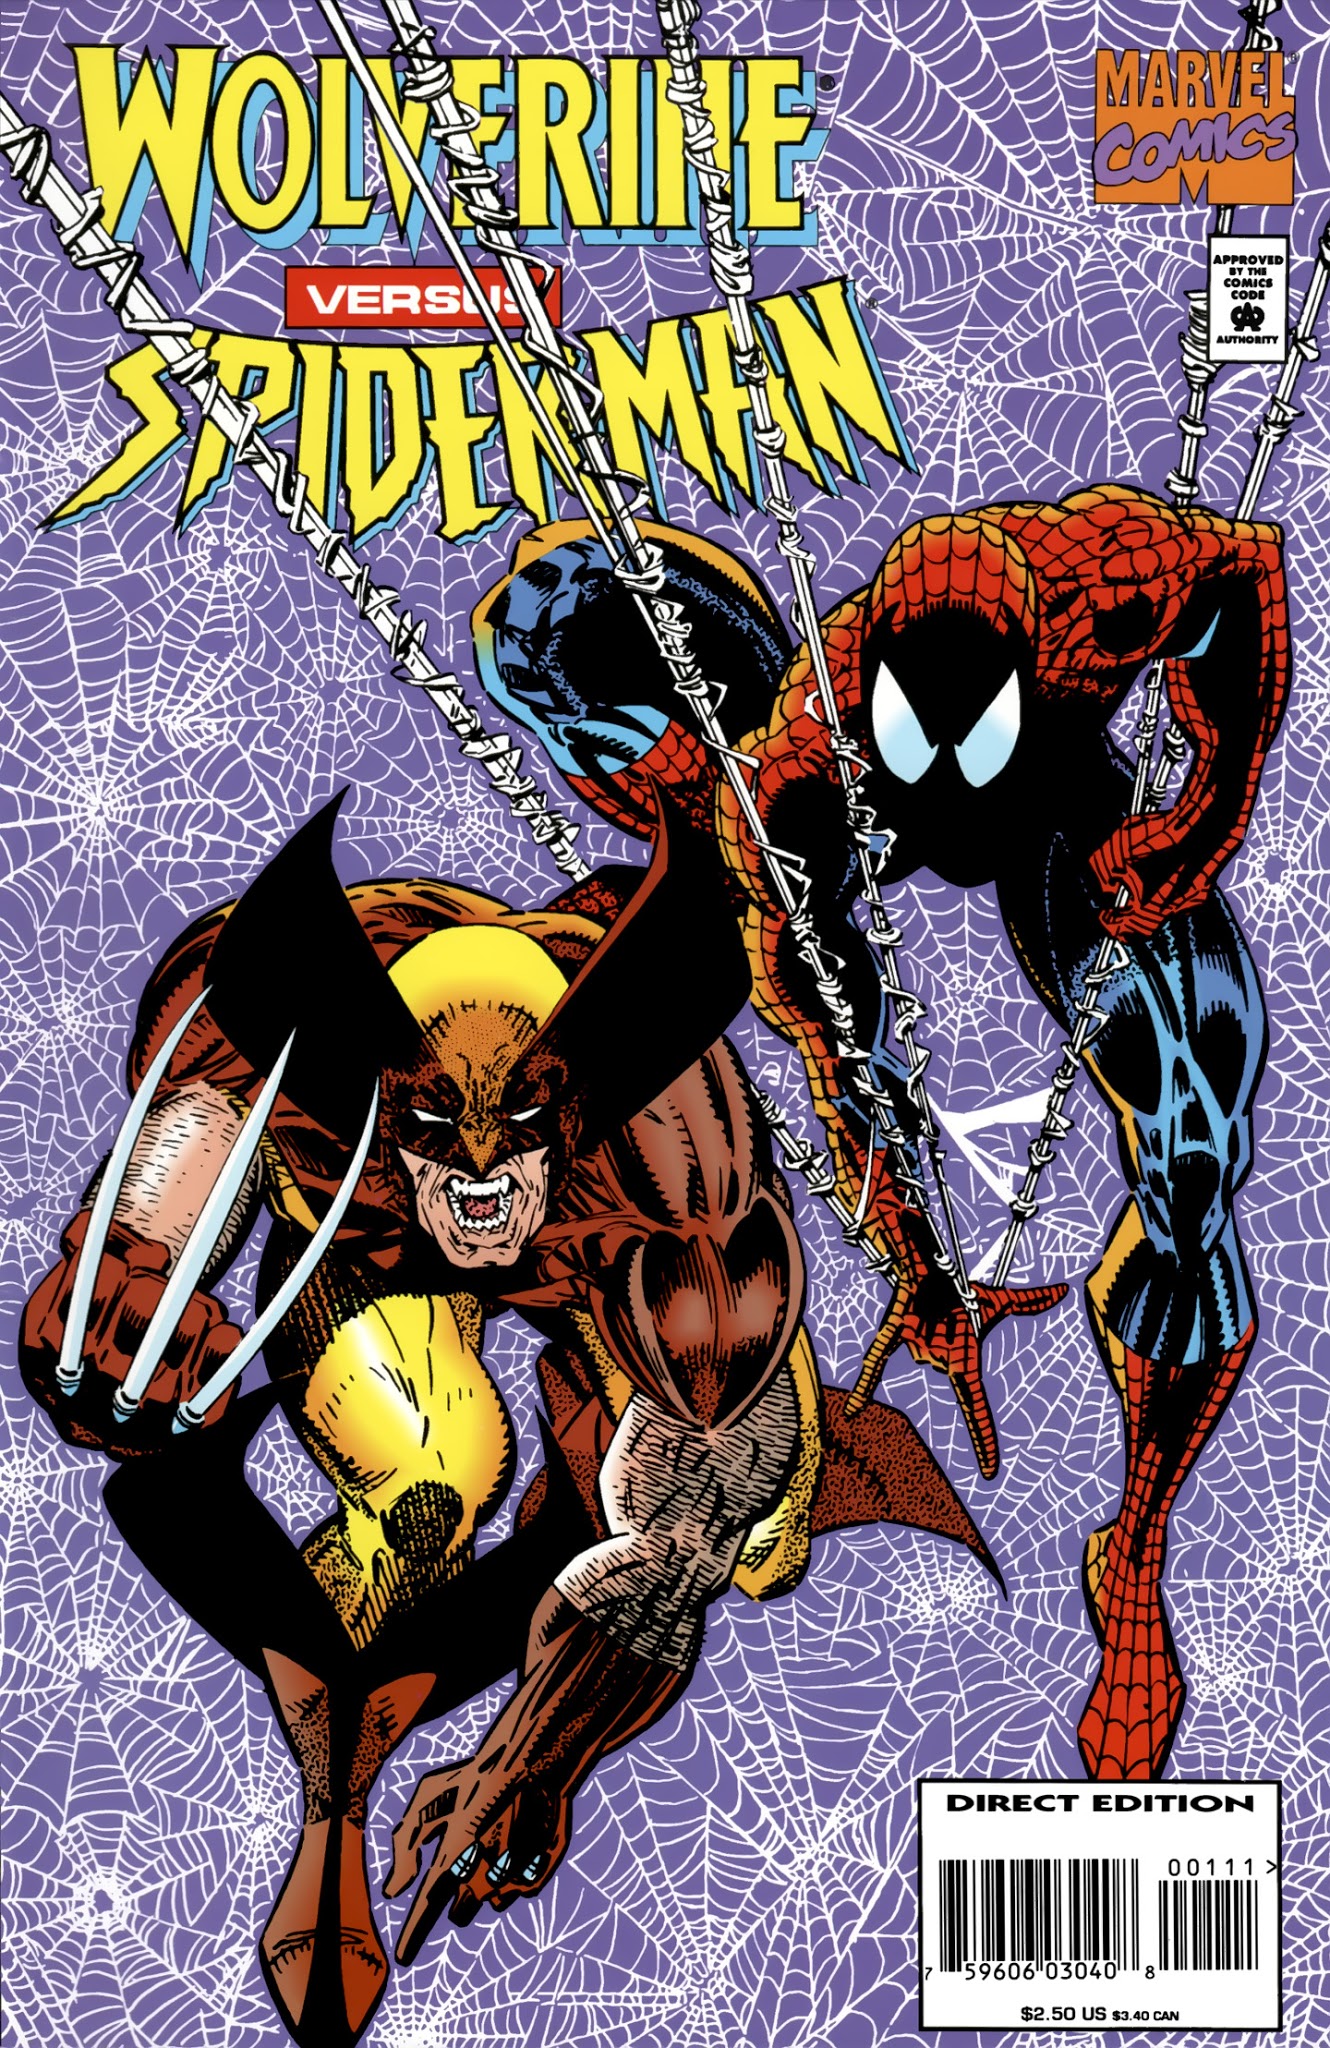 Read online Wolverine vs. Spider-Man comic -  Issue # Full - 1